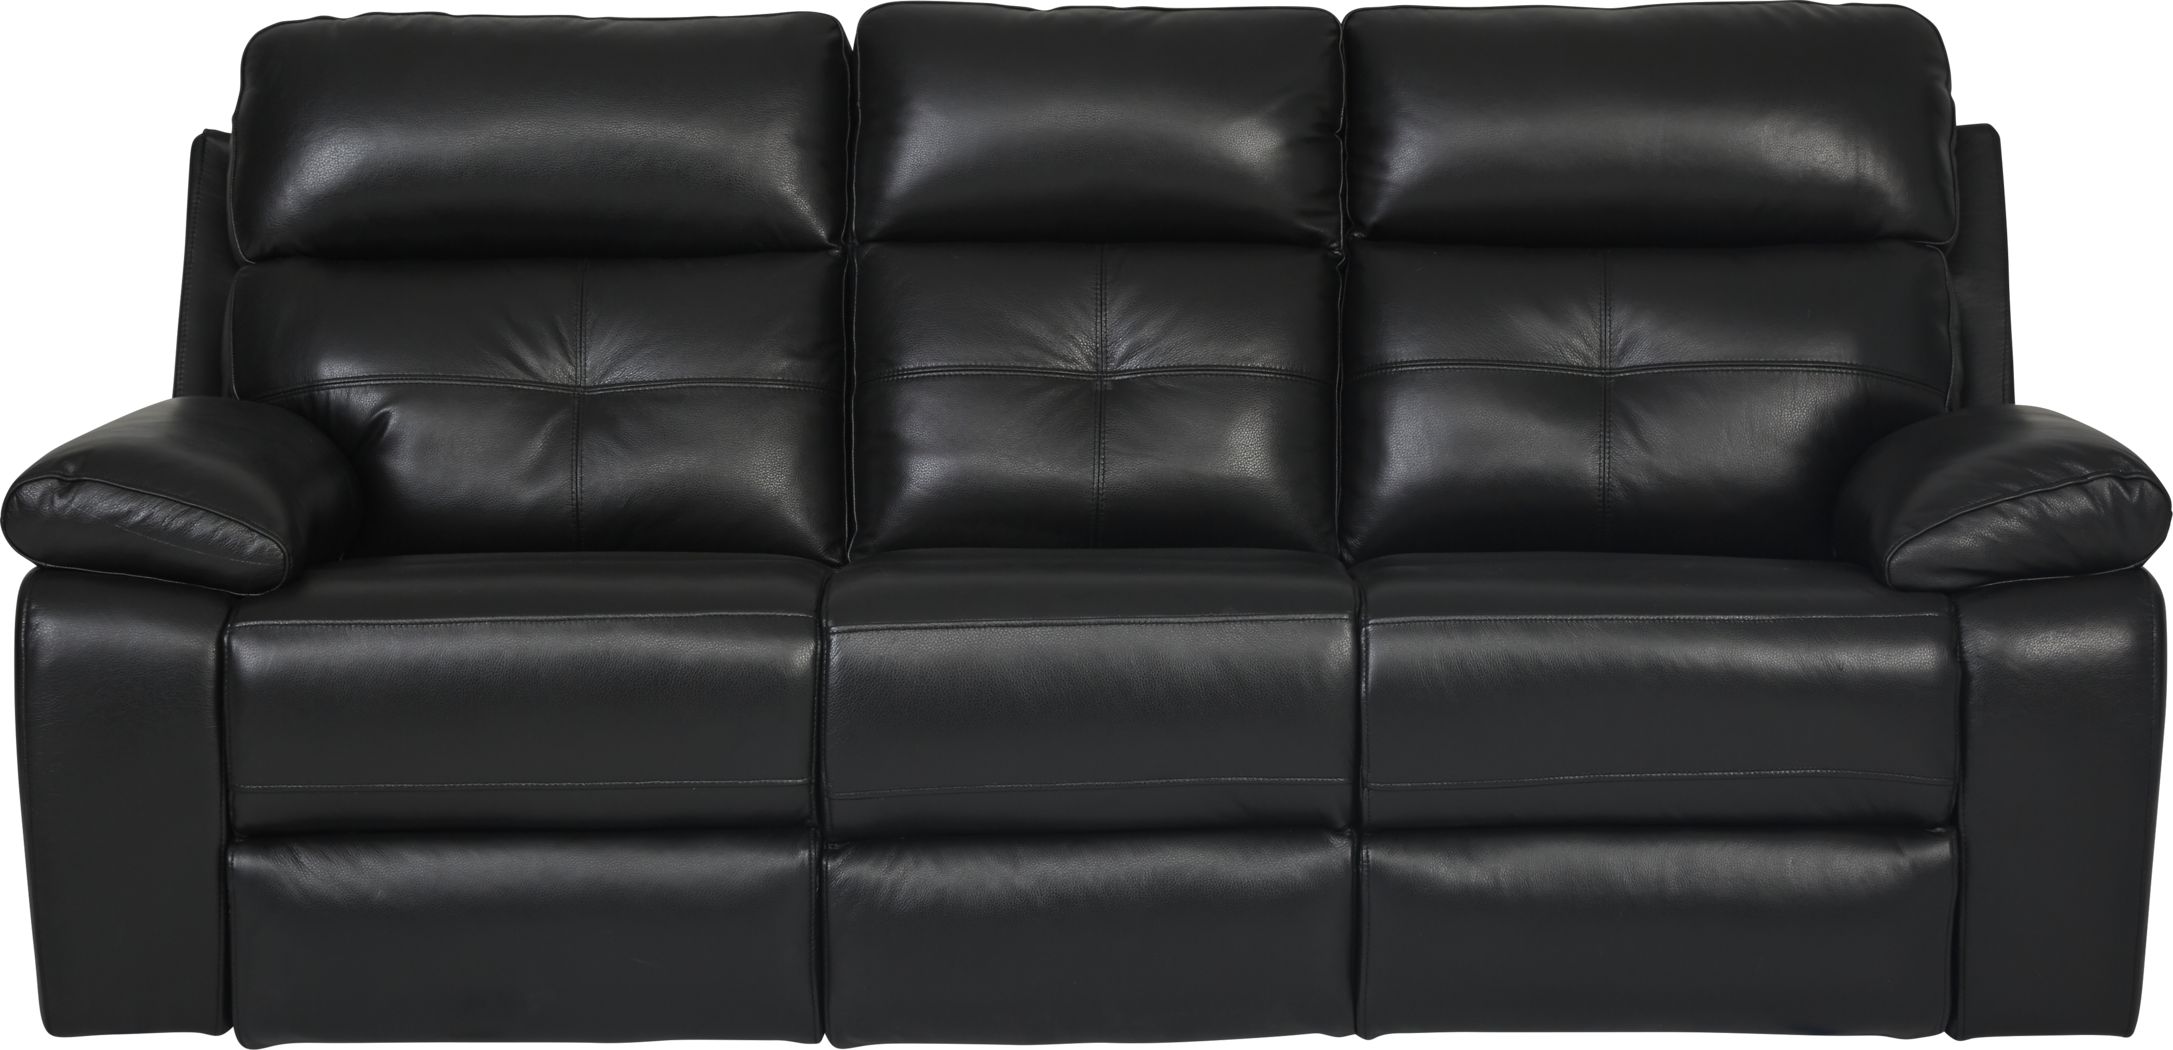 Leather Living Room Furniture, Black Sofa Leather